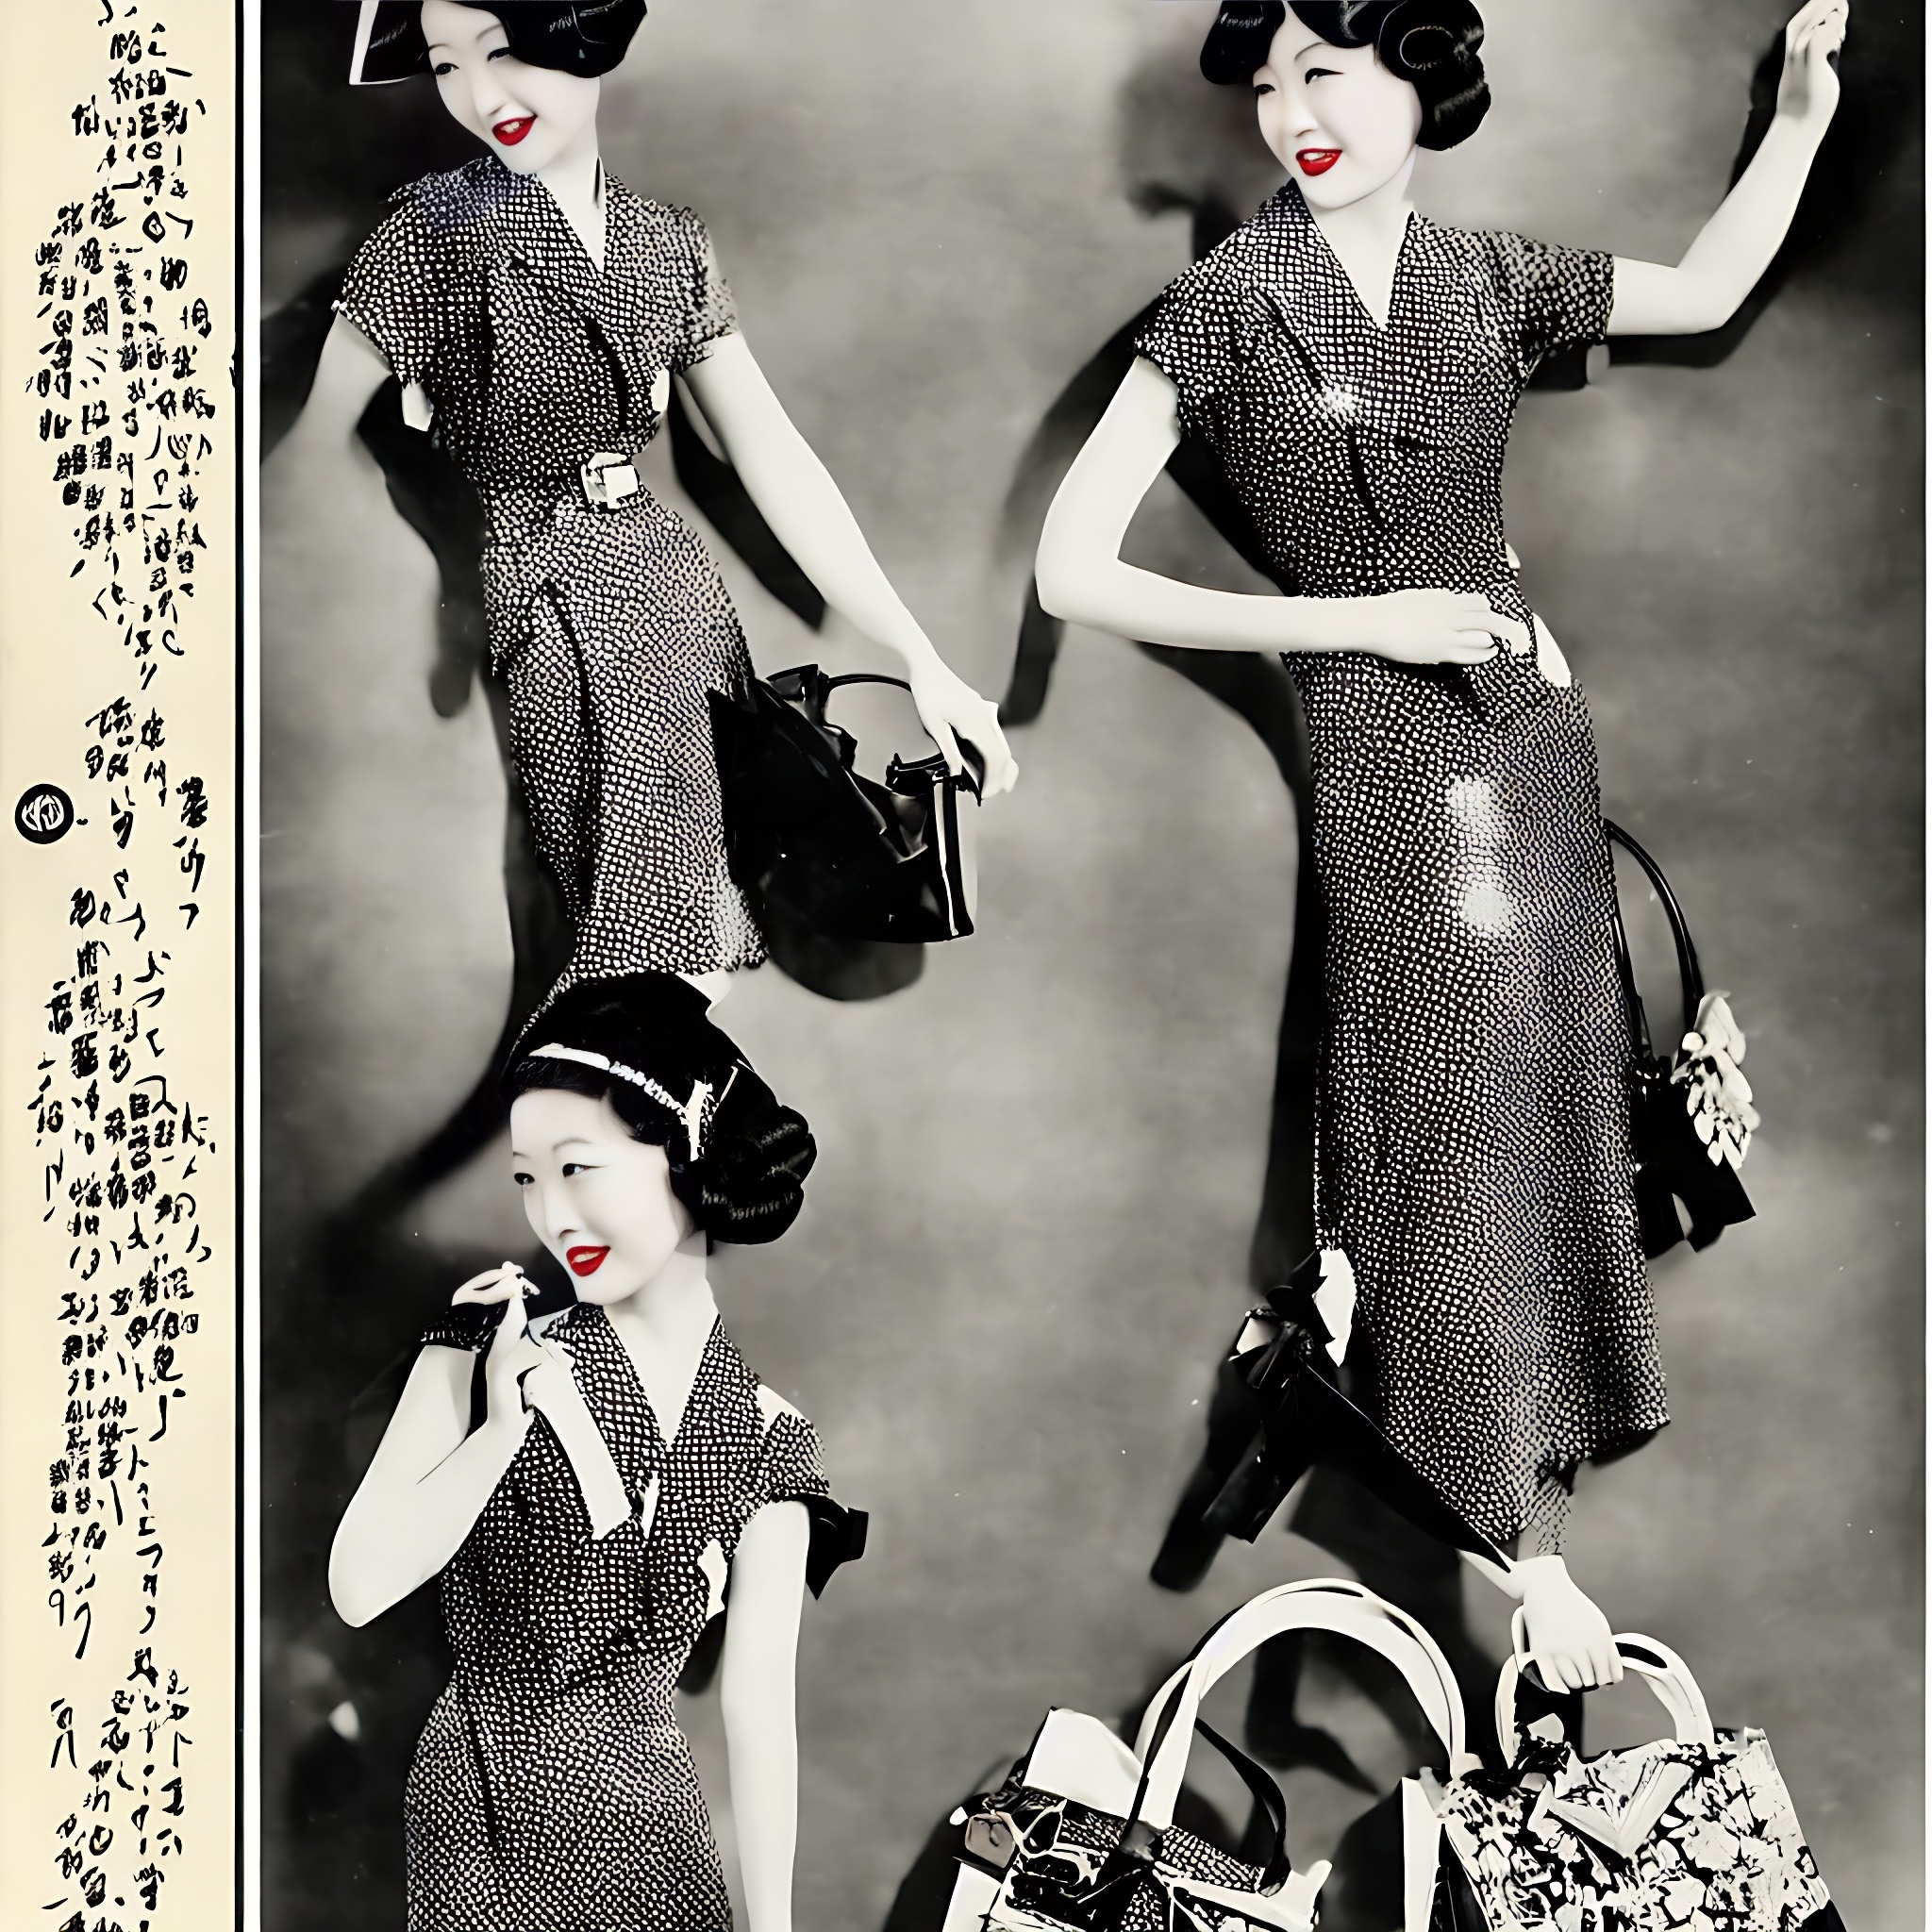 fashion-advertisement-for-1930s-fashion-3